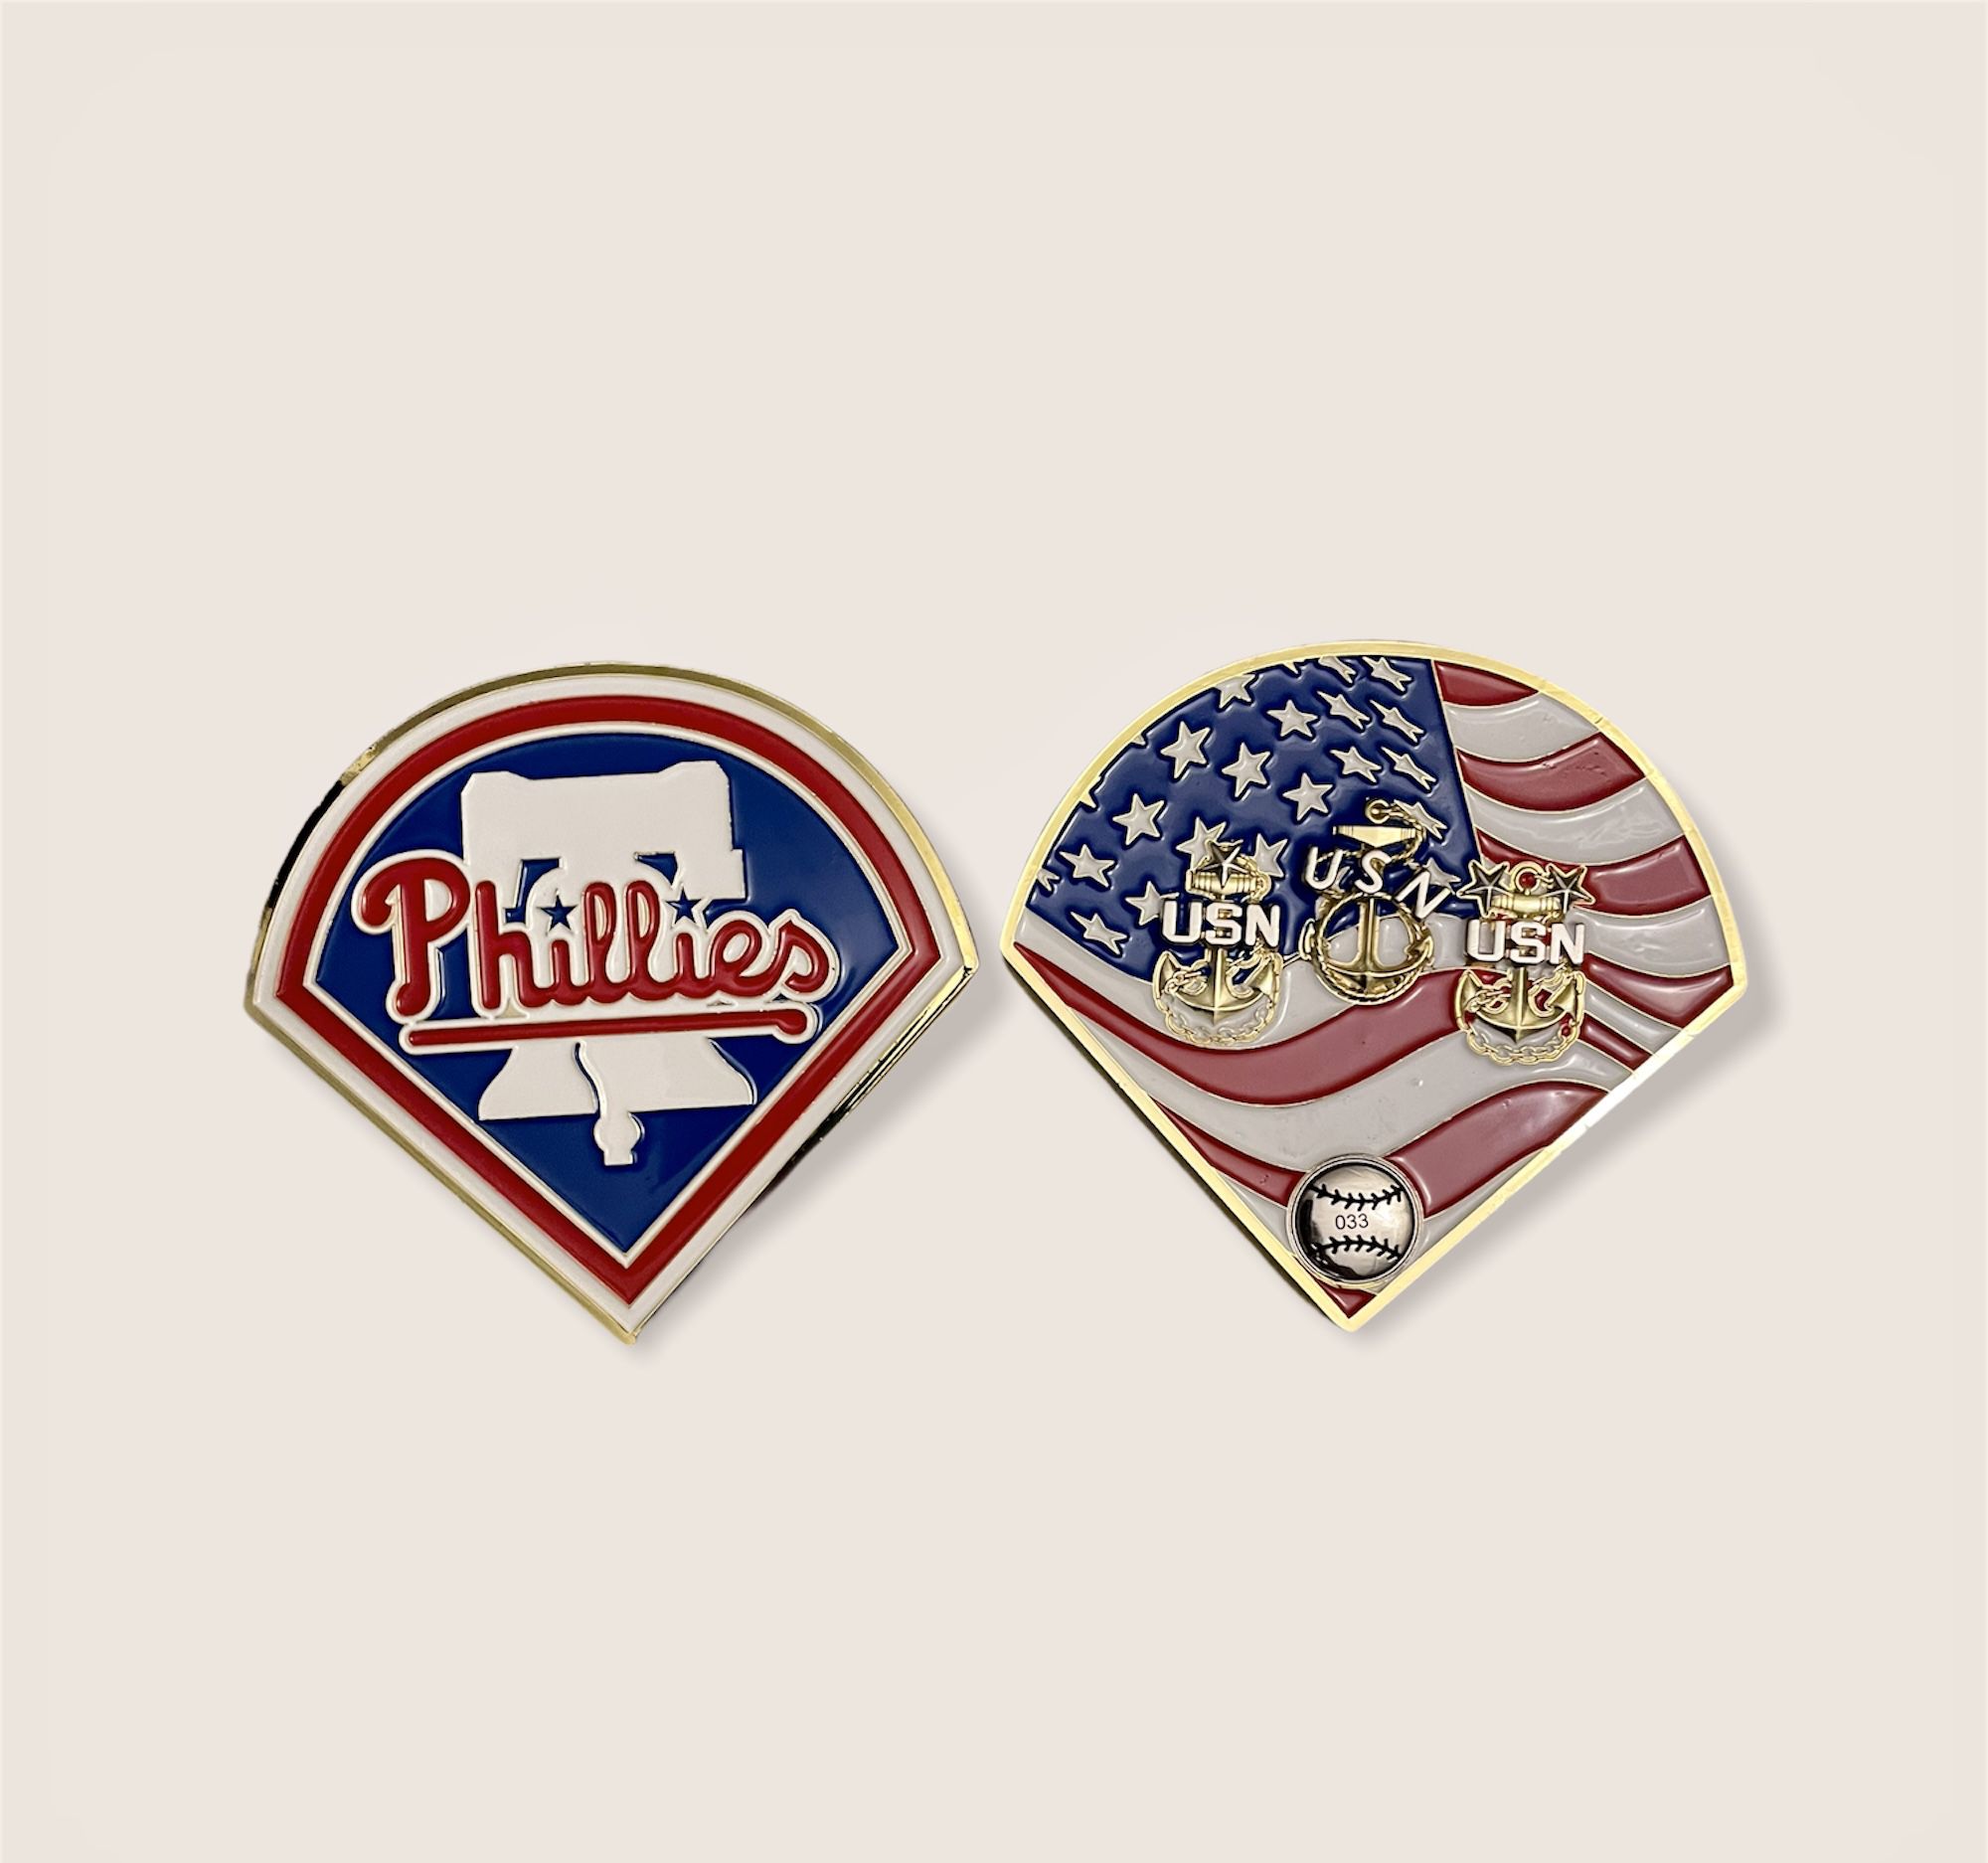 CPO Coins - Philadelphia Phillies